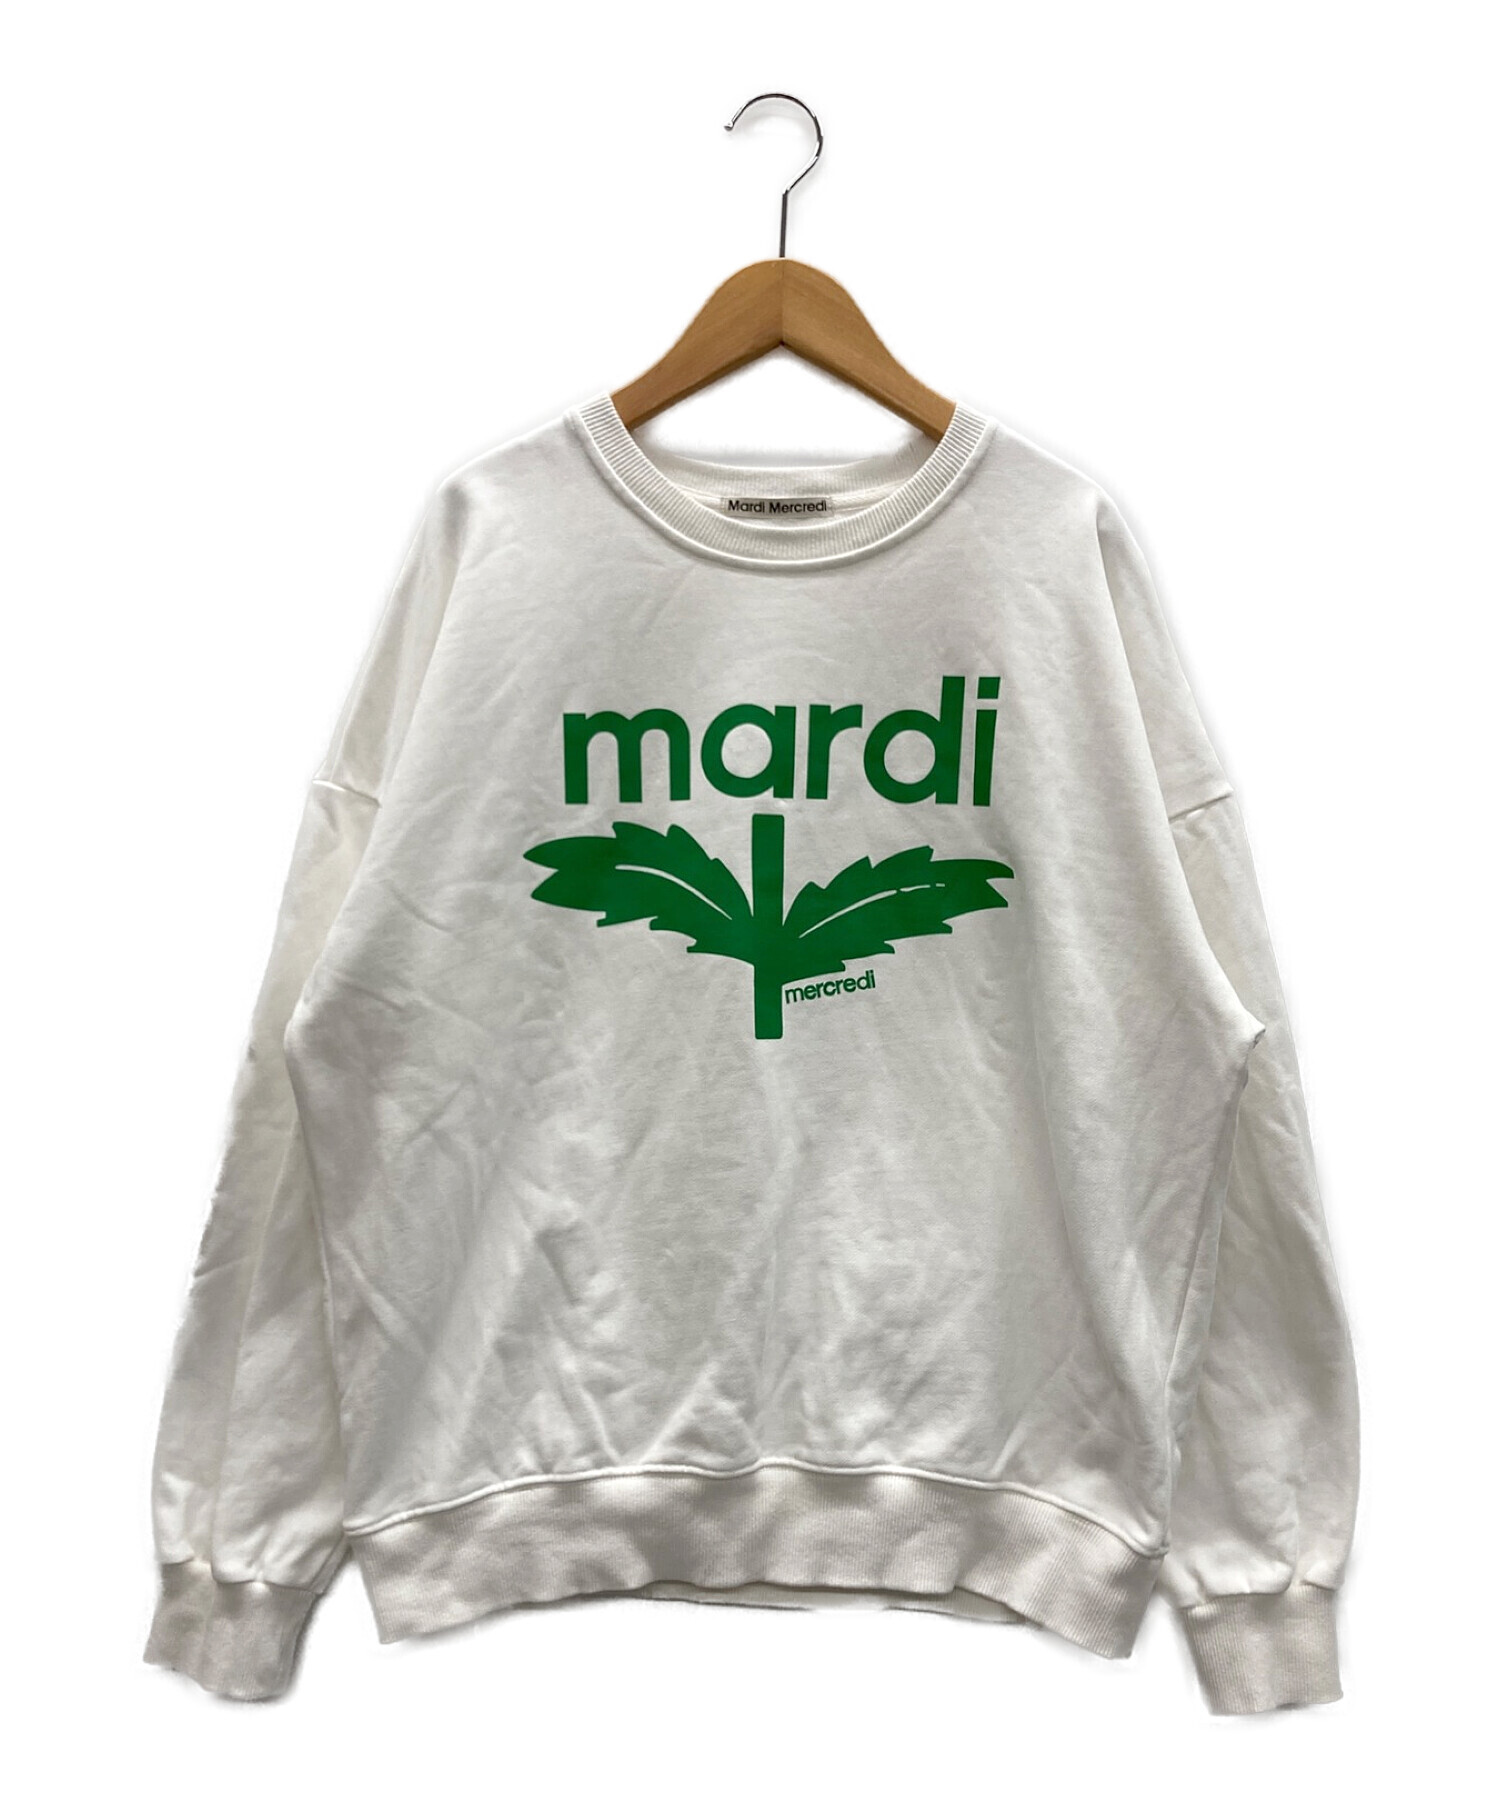 Mardi Mercredi (マルディメクルディ) スウェット ホワイト×グリーン サイズ:記載なし